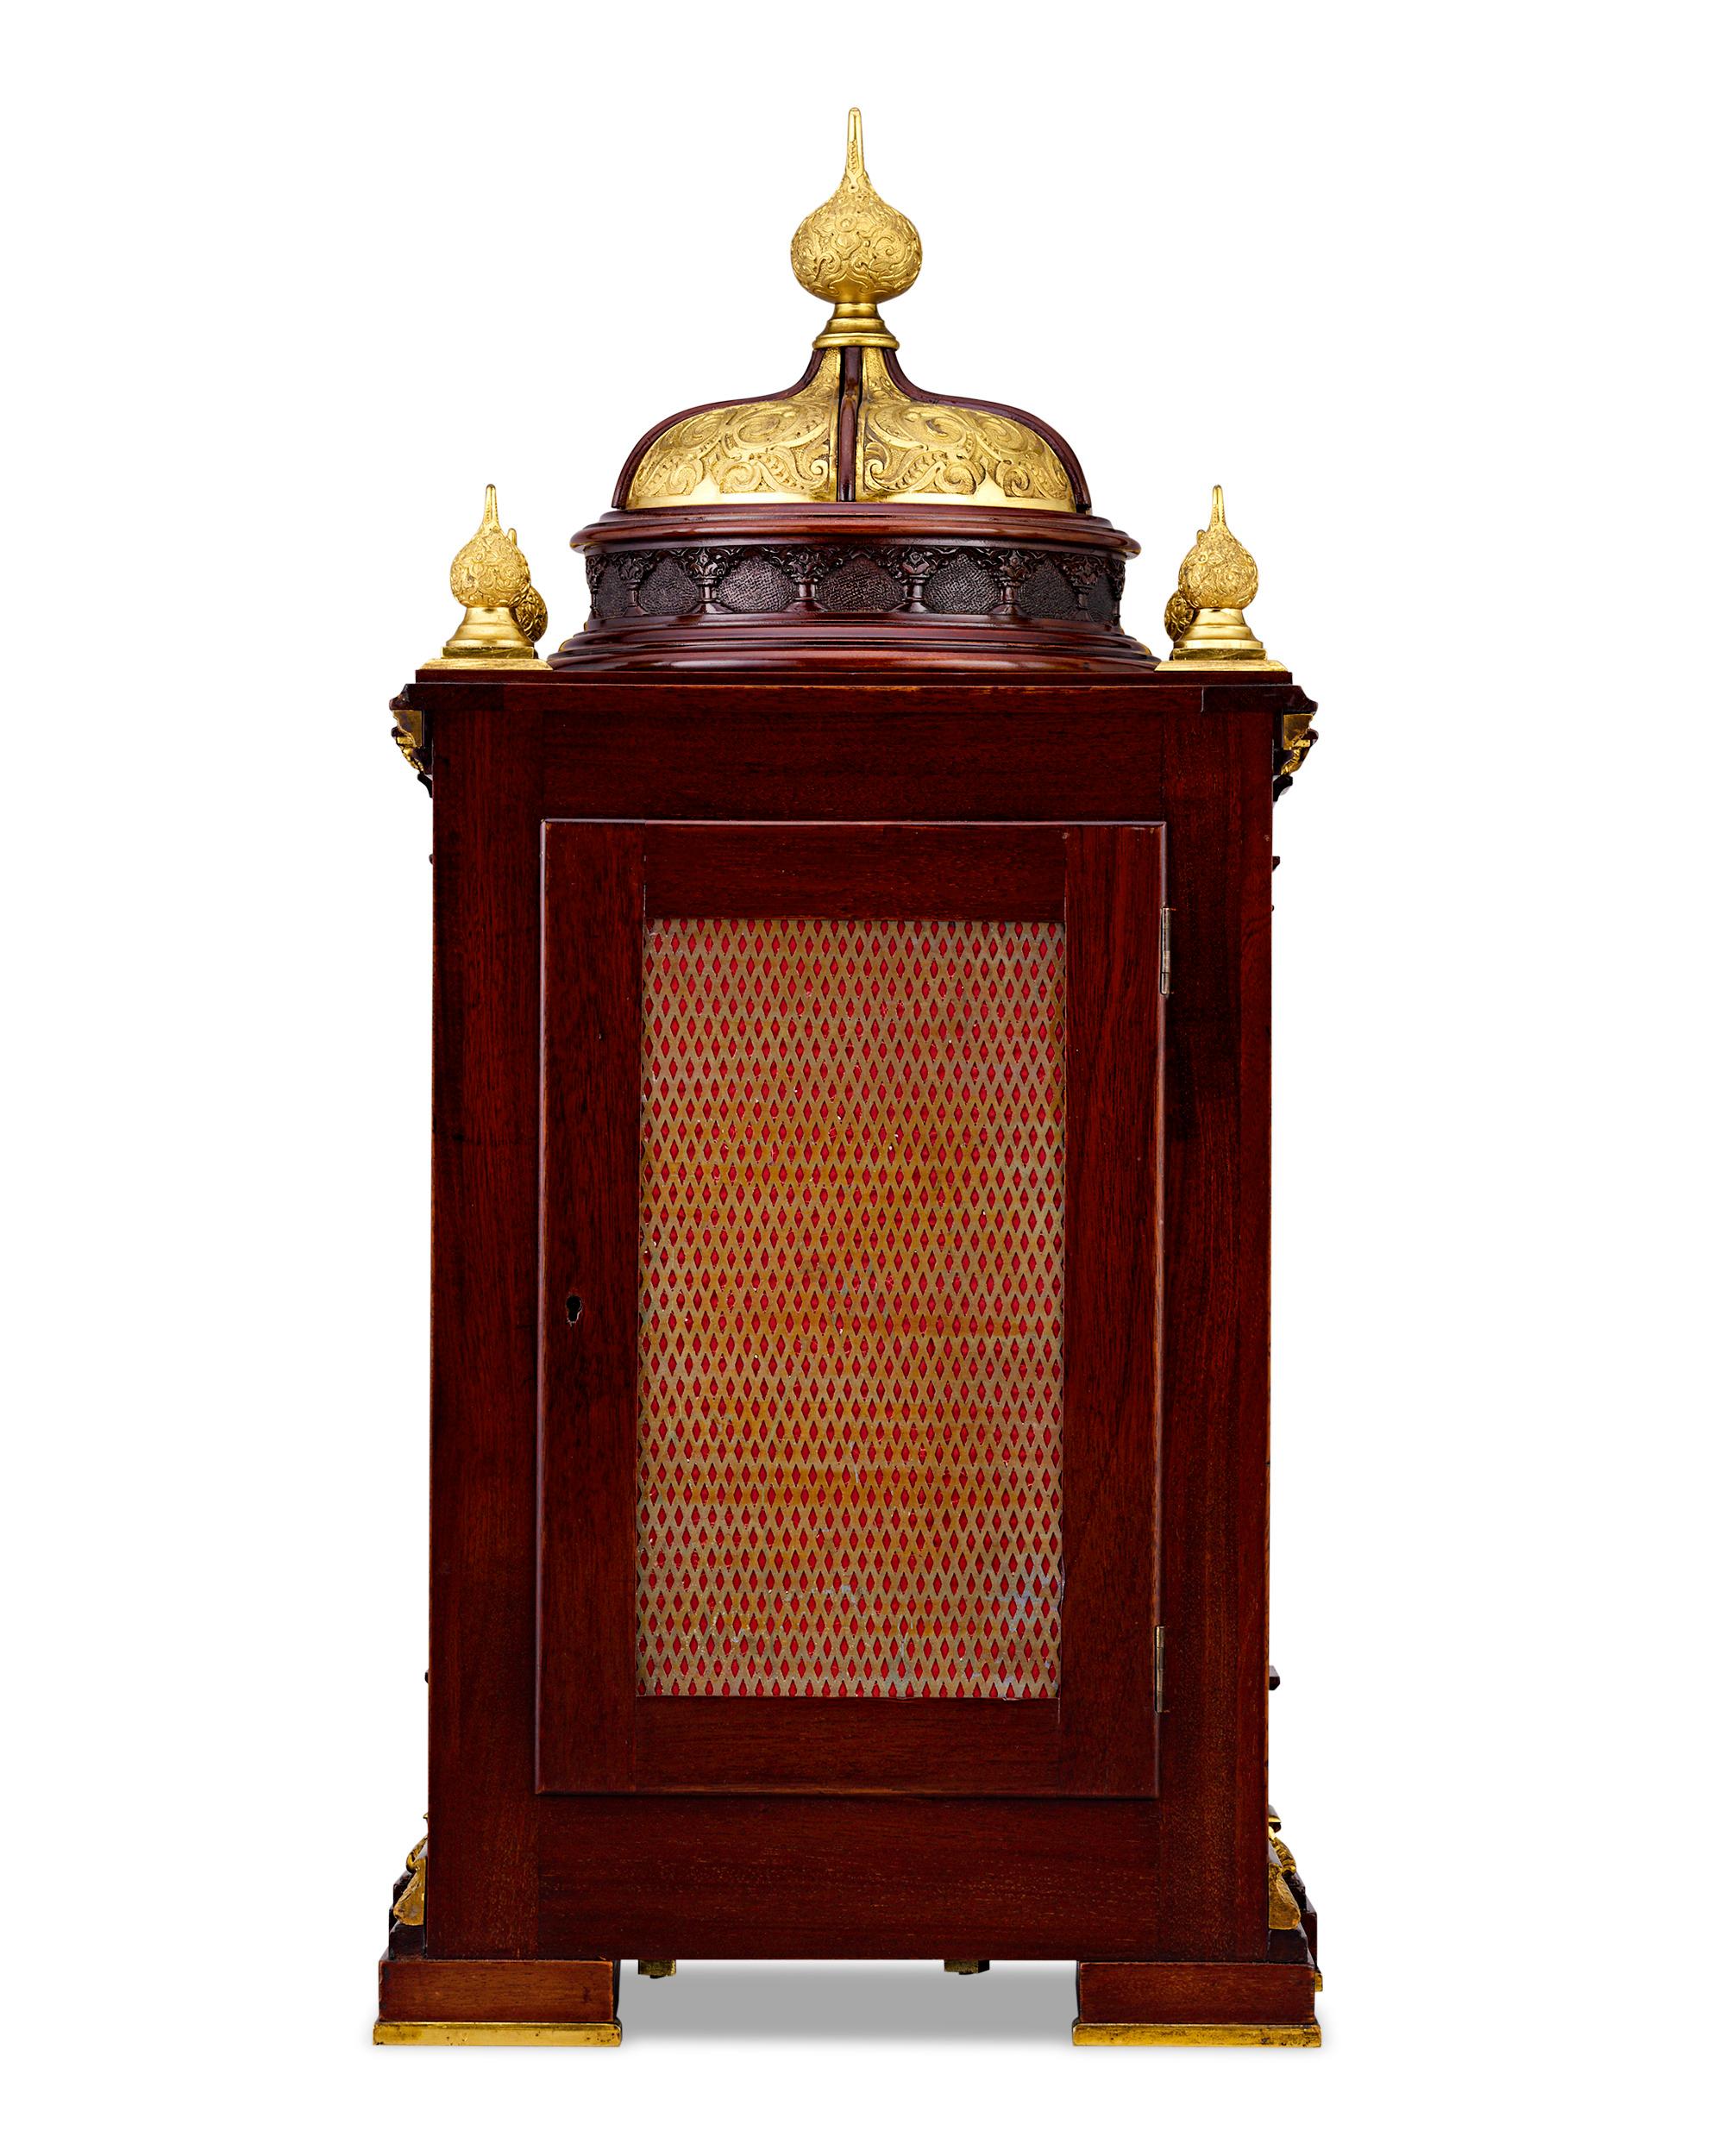 North American Moorish Mantel Clock by Tiffany & Co.